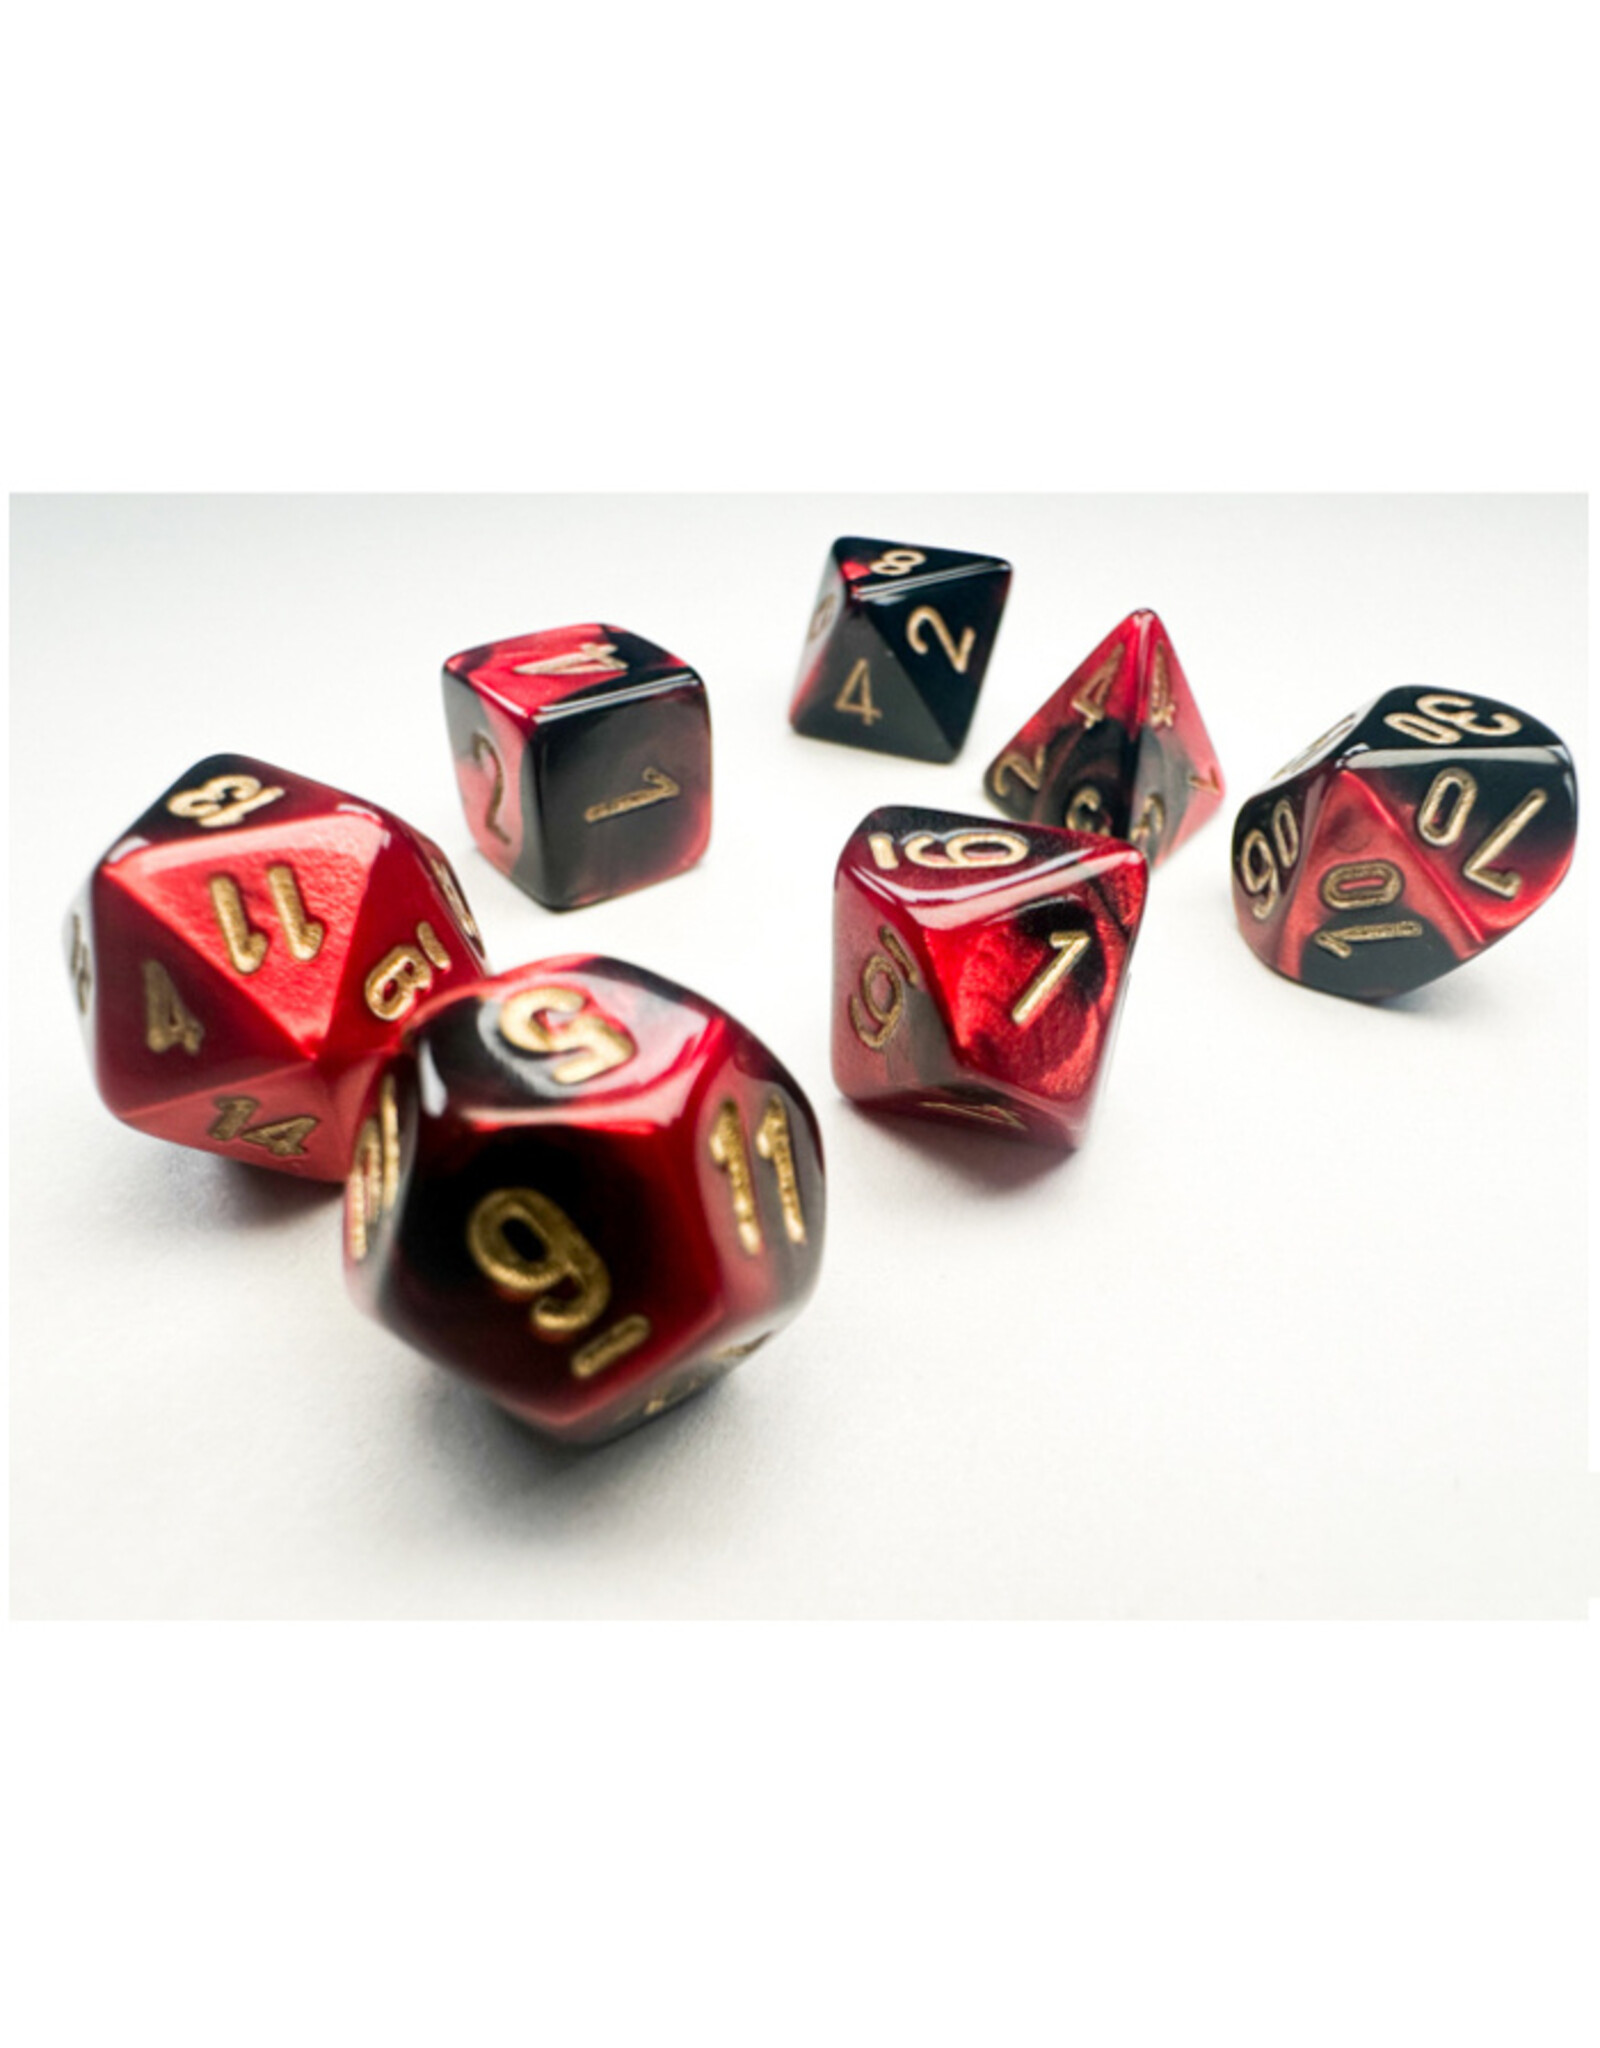 Chessex 7-Set Mini Gemini Black Red with Gold